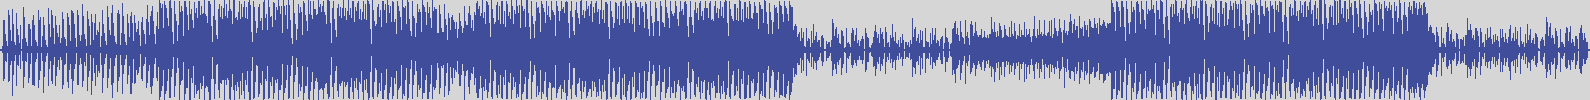 nf_boyz_records [NFY080] Aquatonik - Deep Tronic [House Evolution Mix] audio wave form